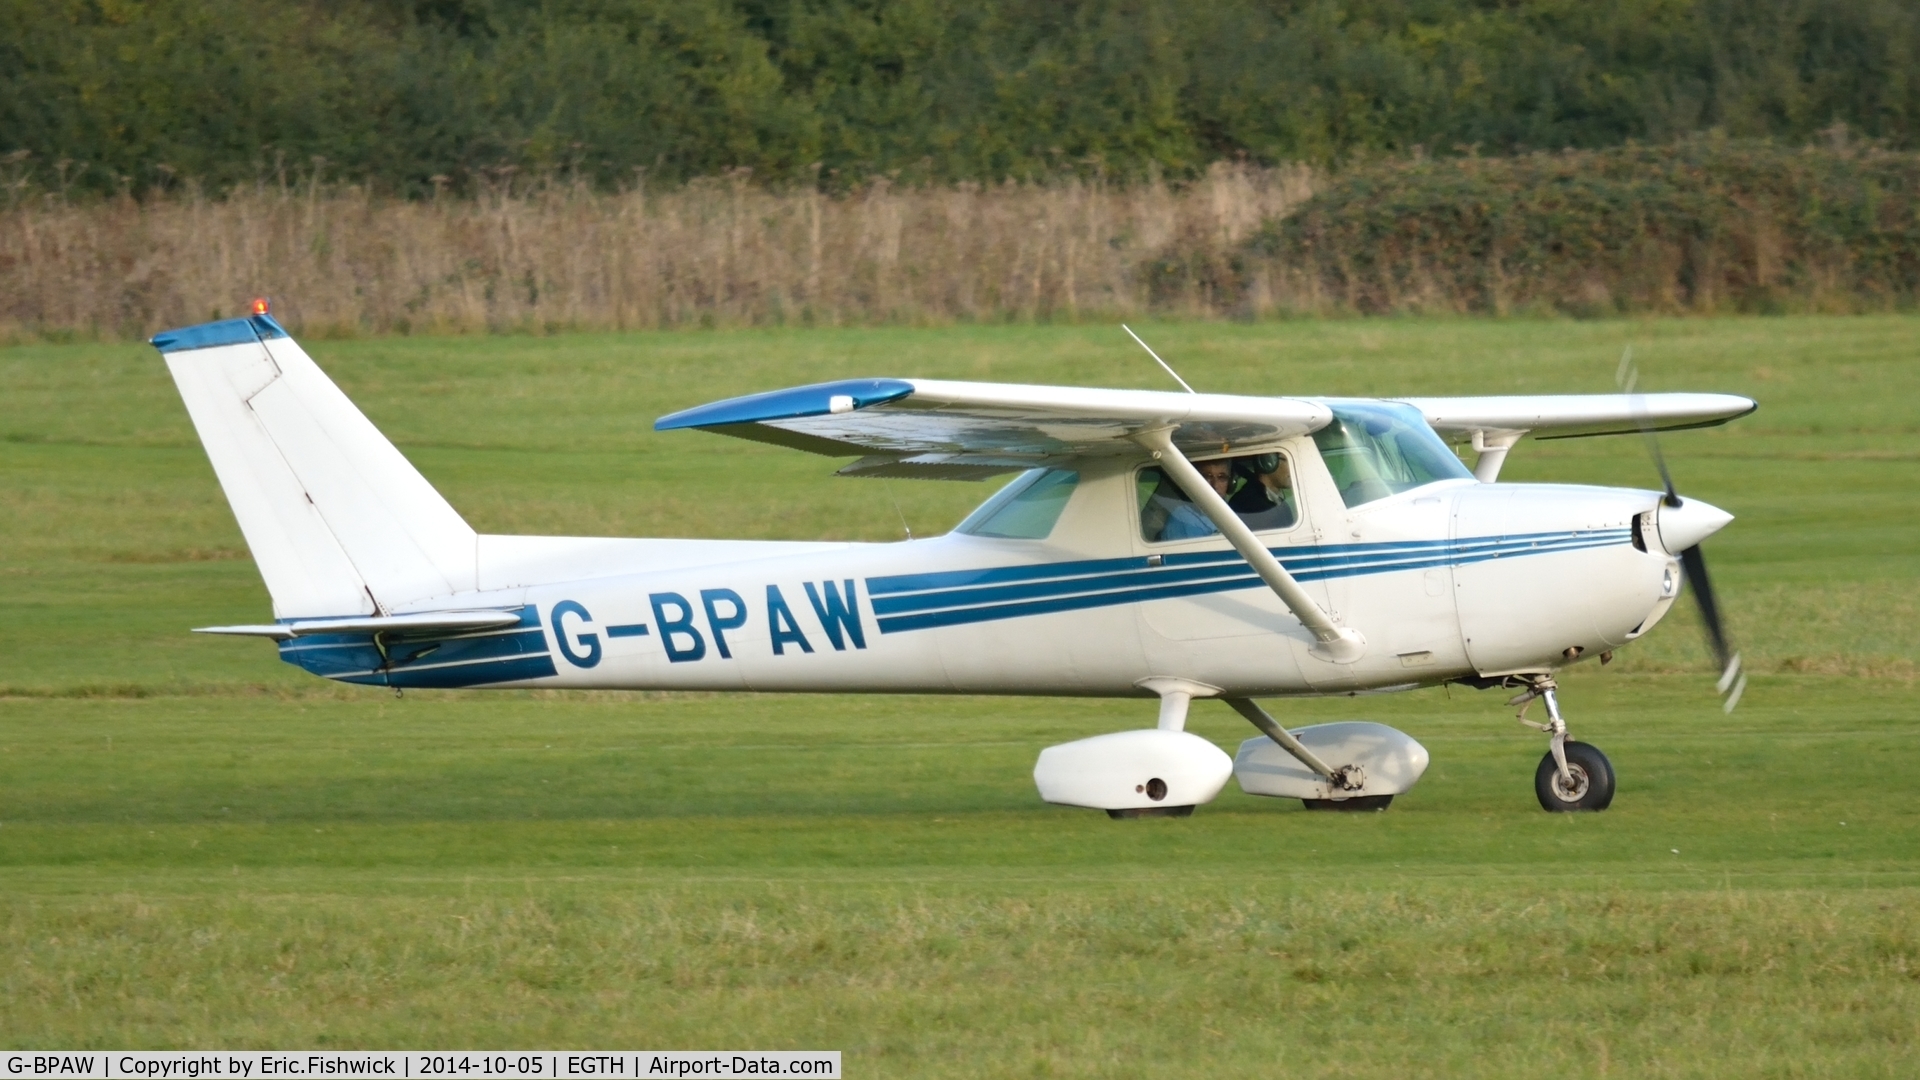 G-BPAW, 1976 Cessna 150M C/N 150-77923, 3. G-BPAW preparing to depart the rousing season finale Race Day Air Show at Shuttleworth, Oct. 2014.